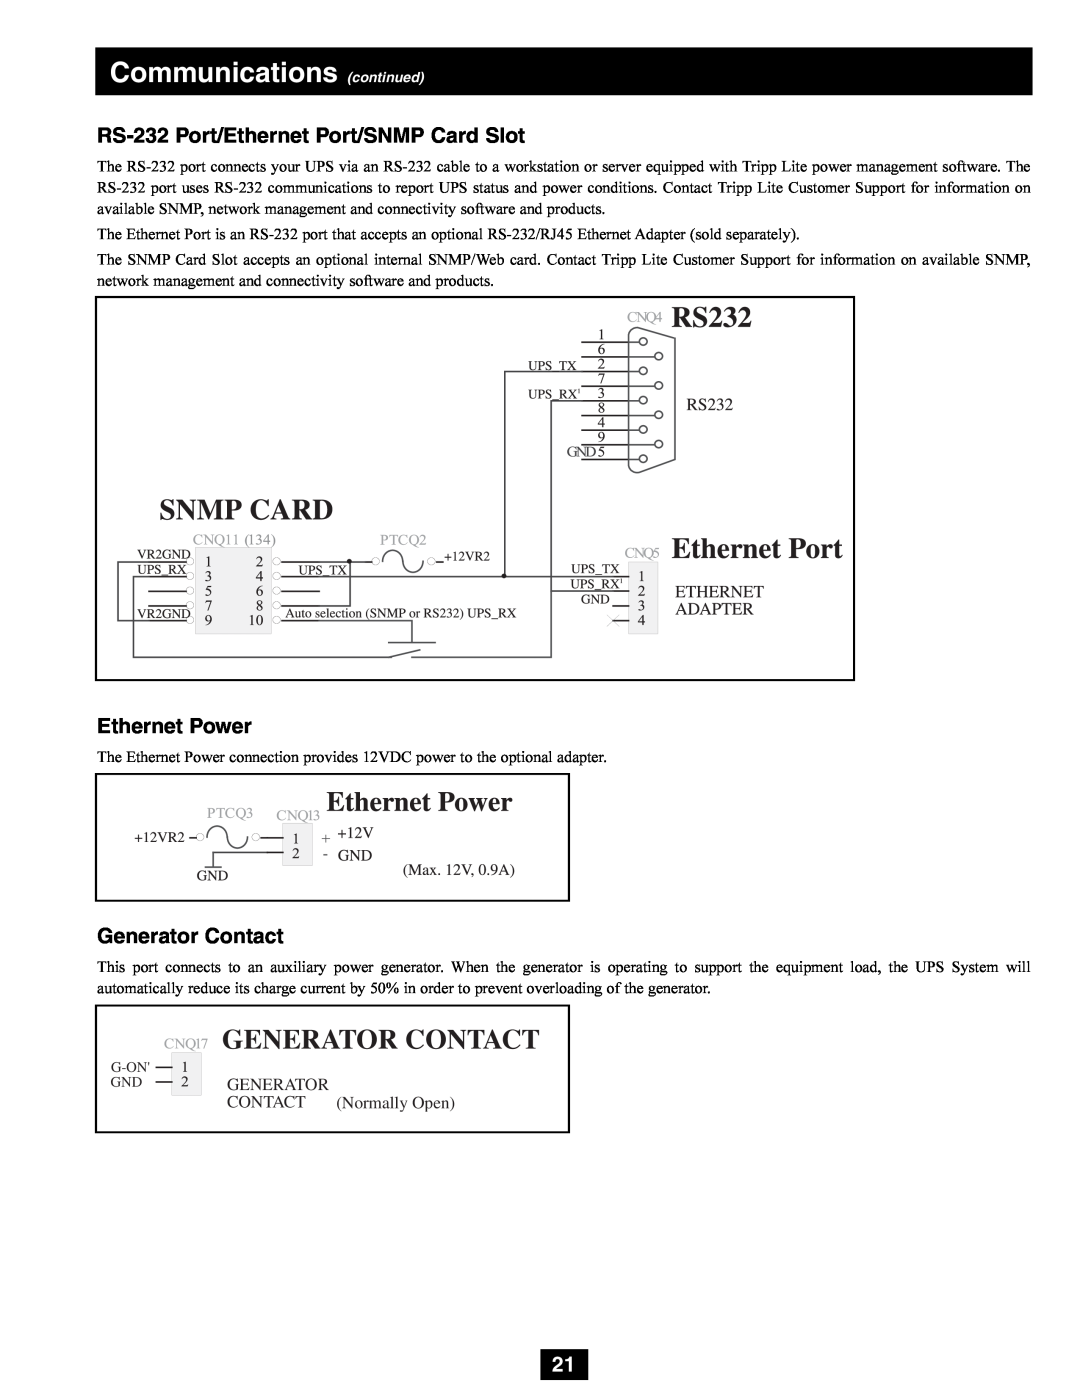 Tripp Lite SU80K3/3INTPM, SU80K3/3PM Communications continued, Generator Contact, RS-232 Port/Ethernet Port/SNMP Card Slot 